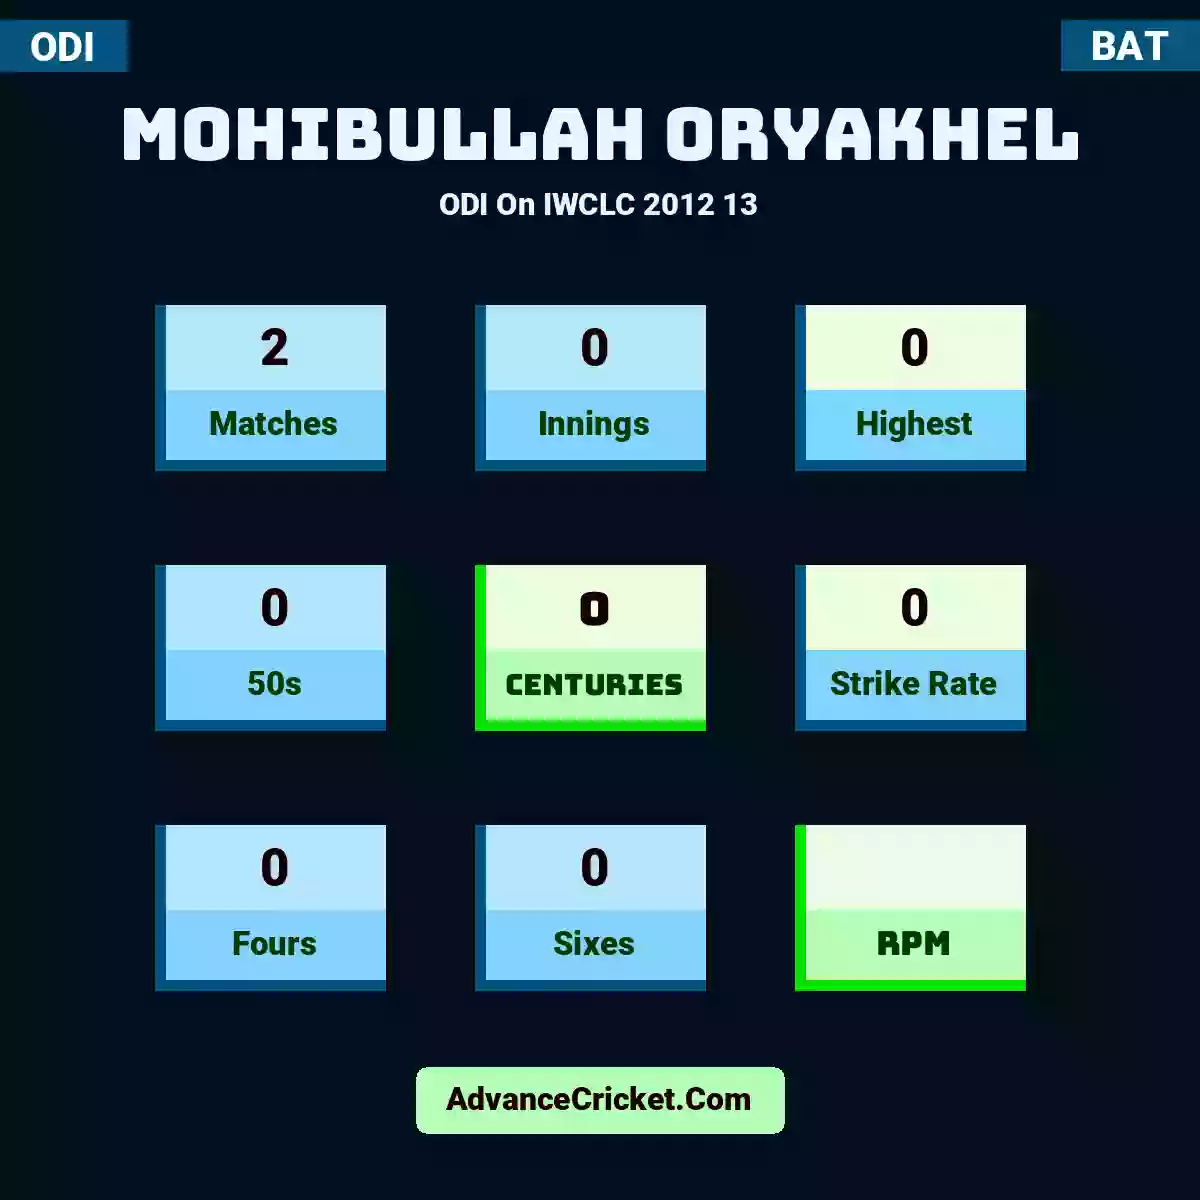 Mohibullah Oryakhel ODI  On IWCLC 2012 13, Mohibullah Oryakhel played 2 matches, scored 0 runs as highest, 0 half-centuries, and 0 centuries, with a strike rate of 0. M.Oryakhel hit 0 fours and 0 sixes.